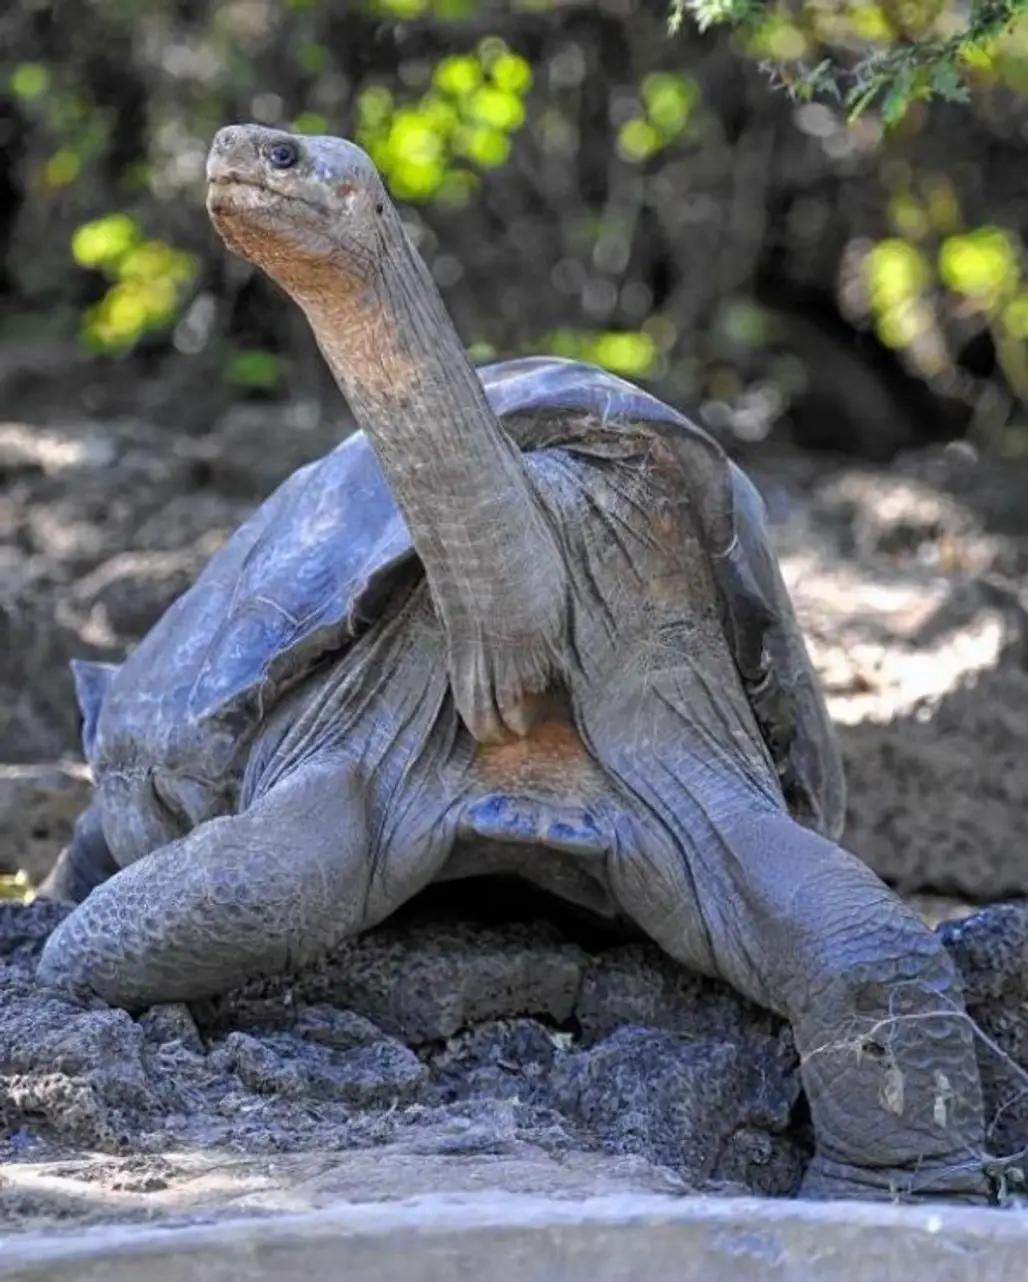 The Pinta Island Giant Tortoise